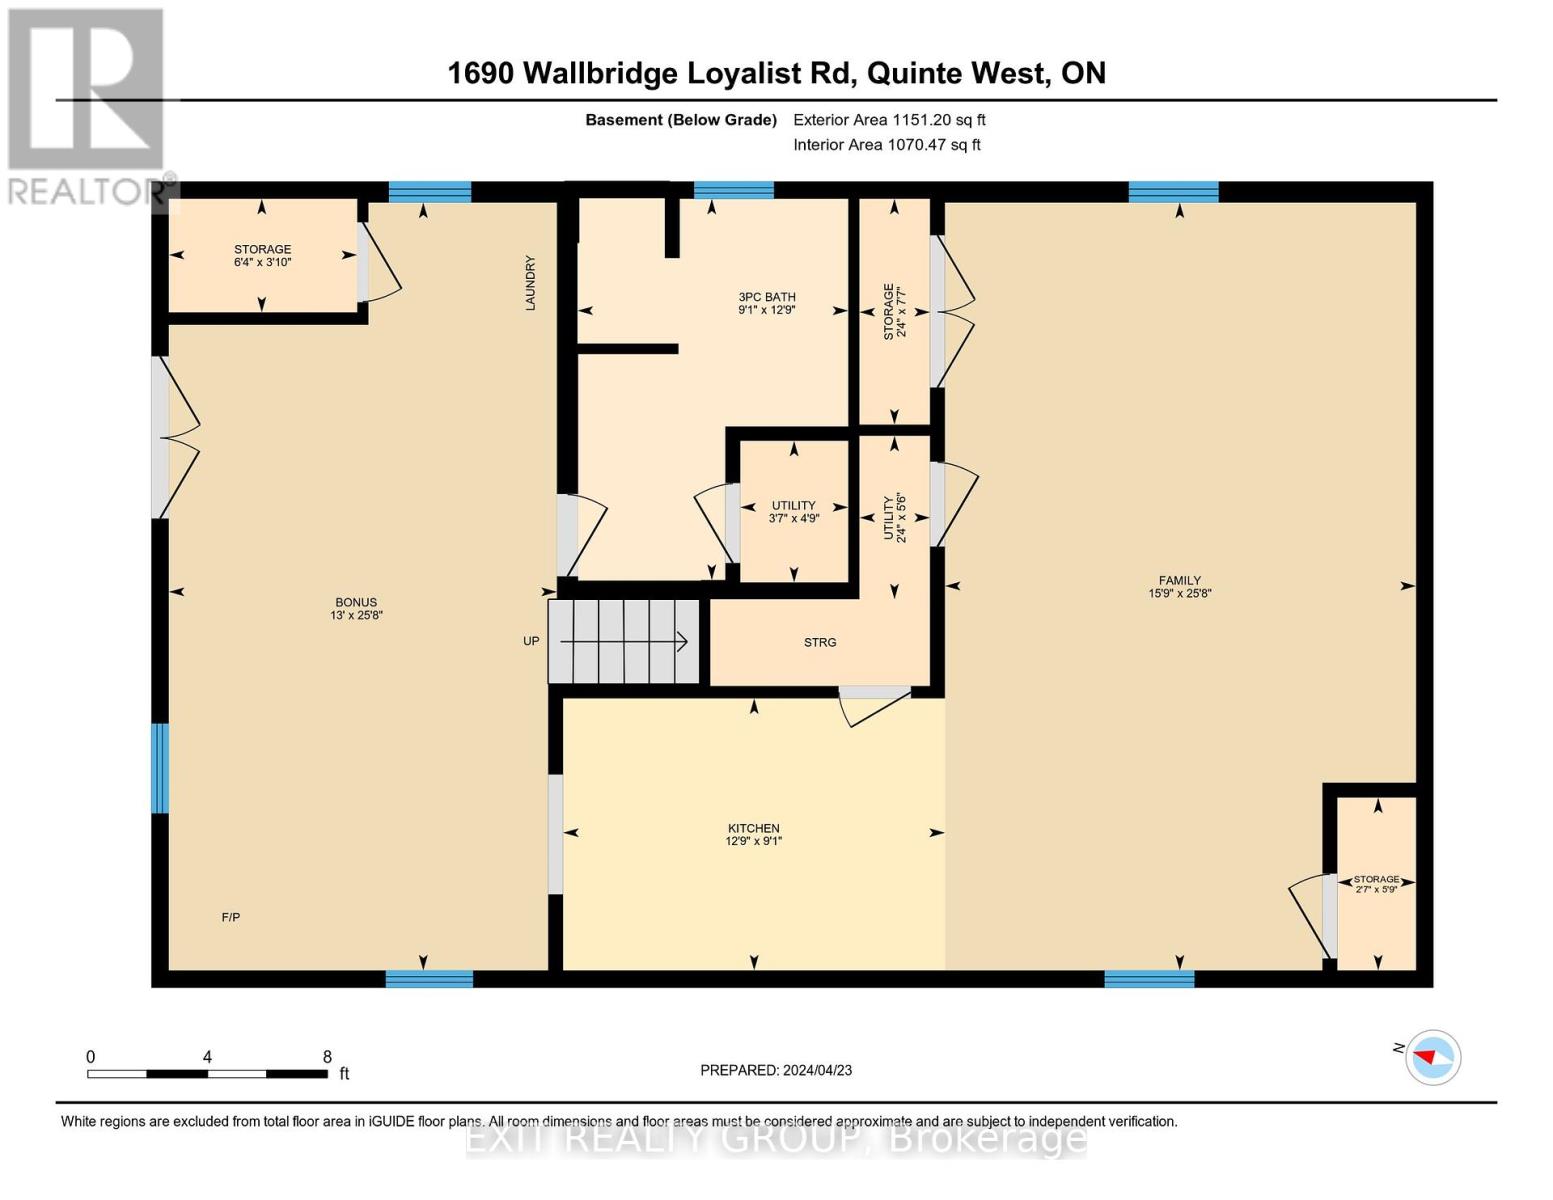 1690 WALLBRIDGE LOYALIST RD Quinte West